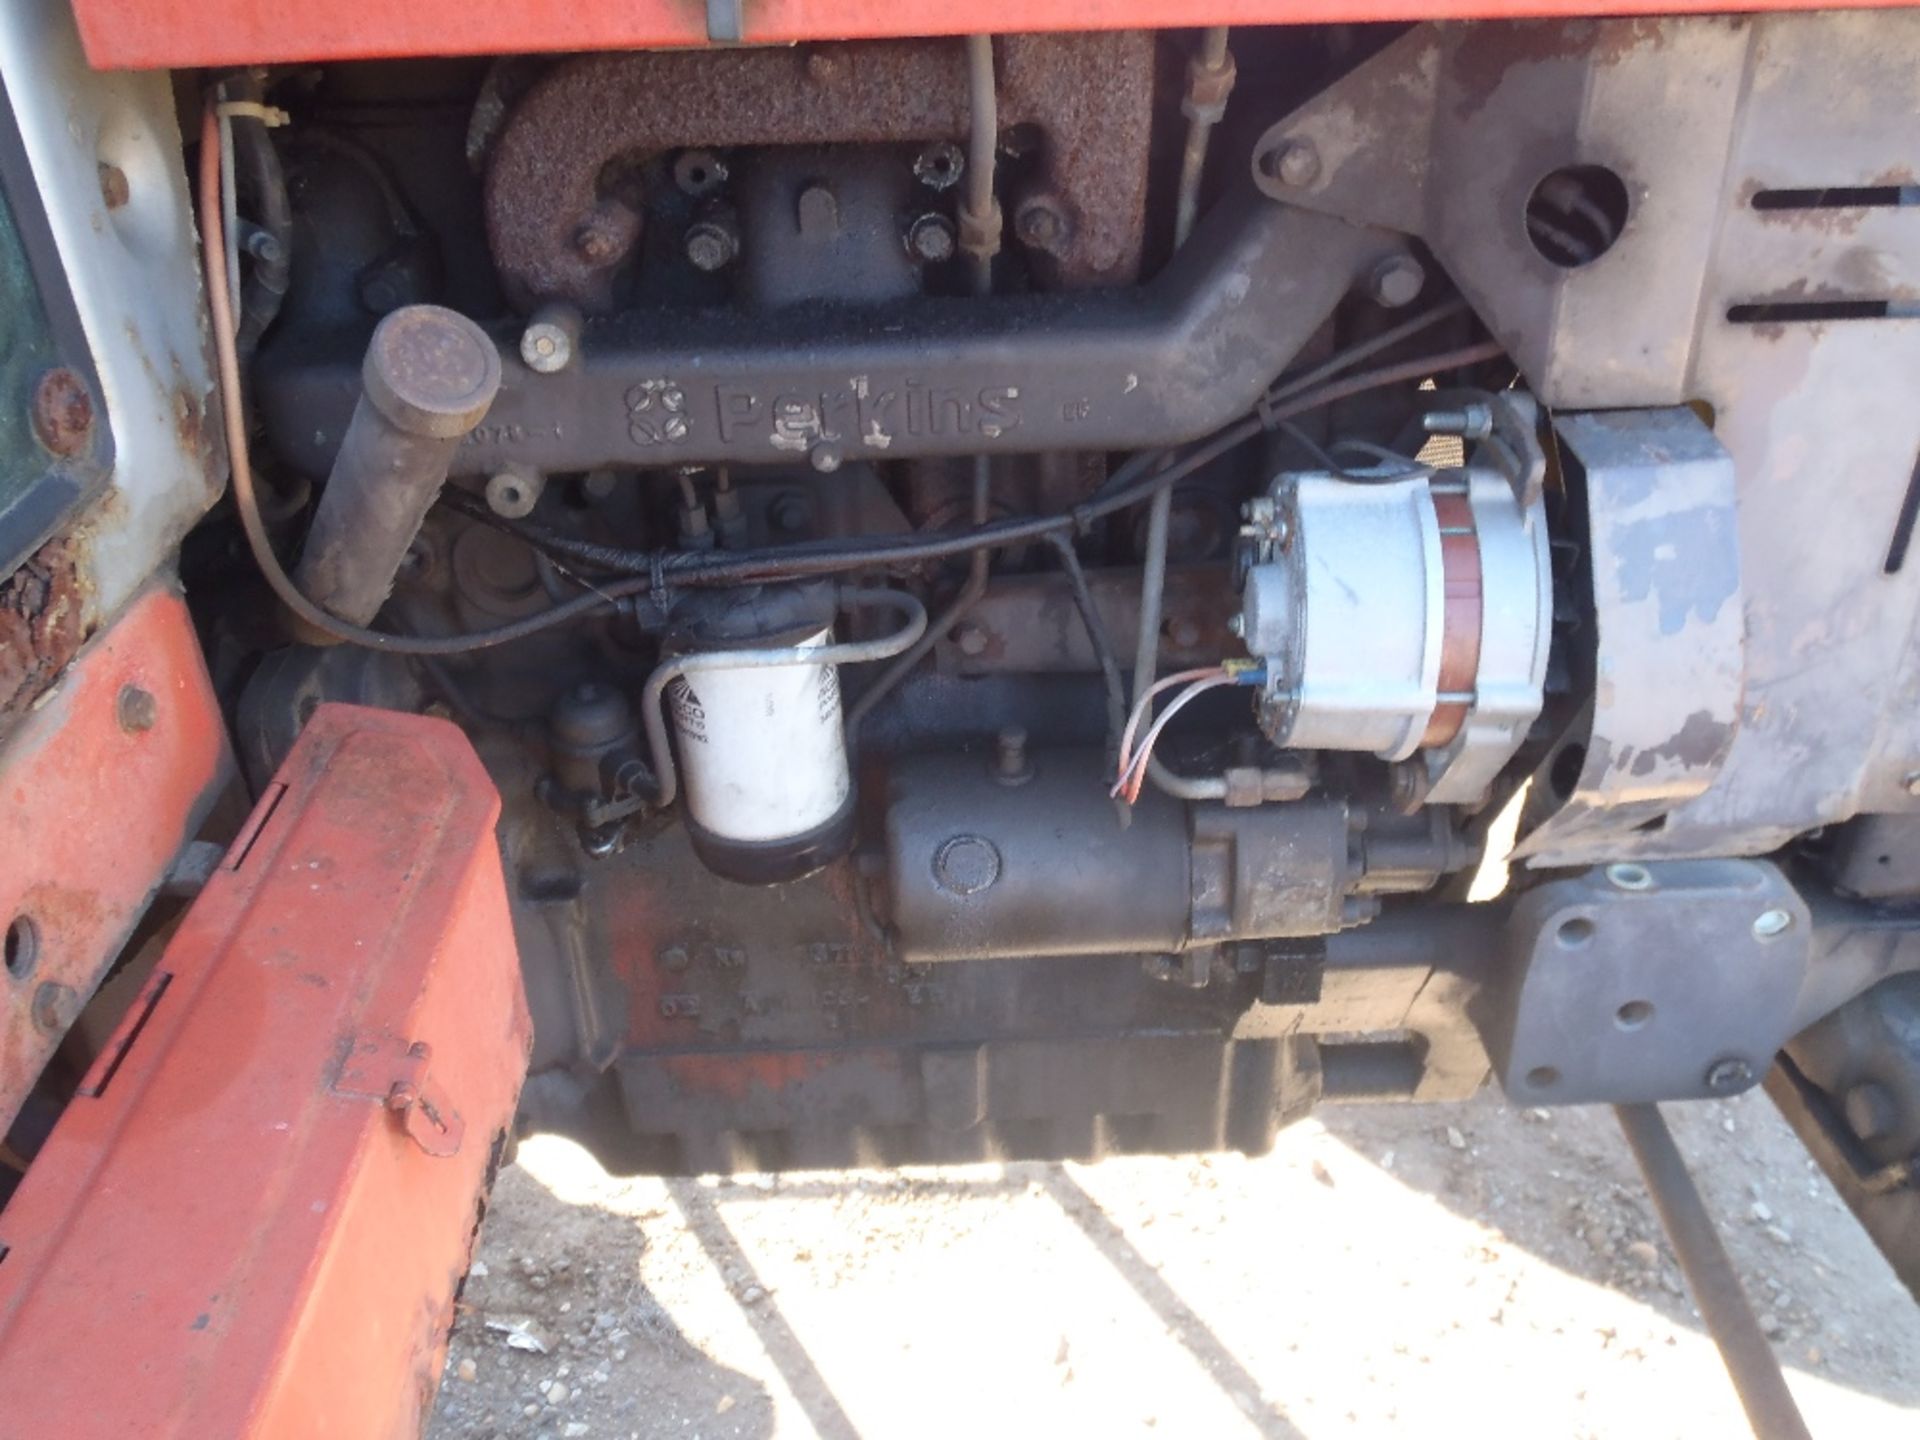 Massey ferguson 690 Tractor 4 Bolt Lift Pump Reg No A982 OEW Ser No K153046 - Image 5 of 8